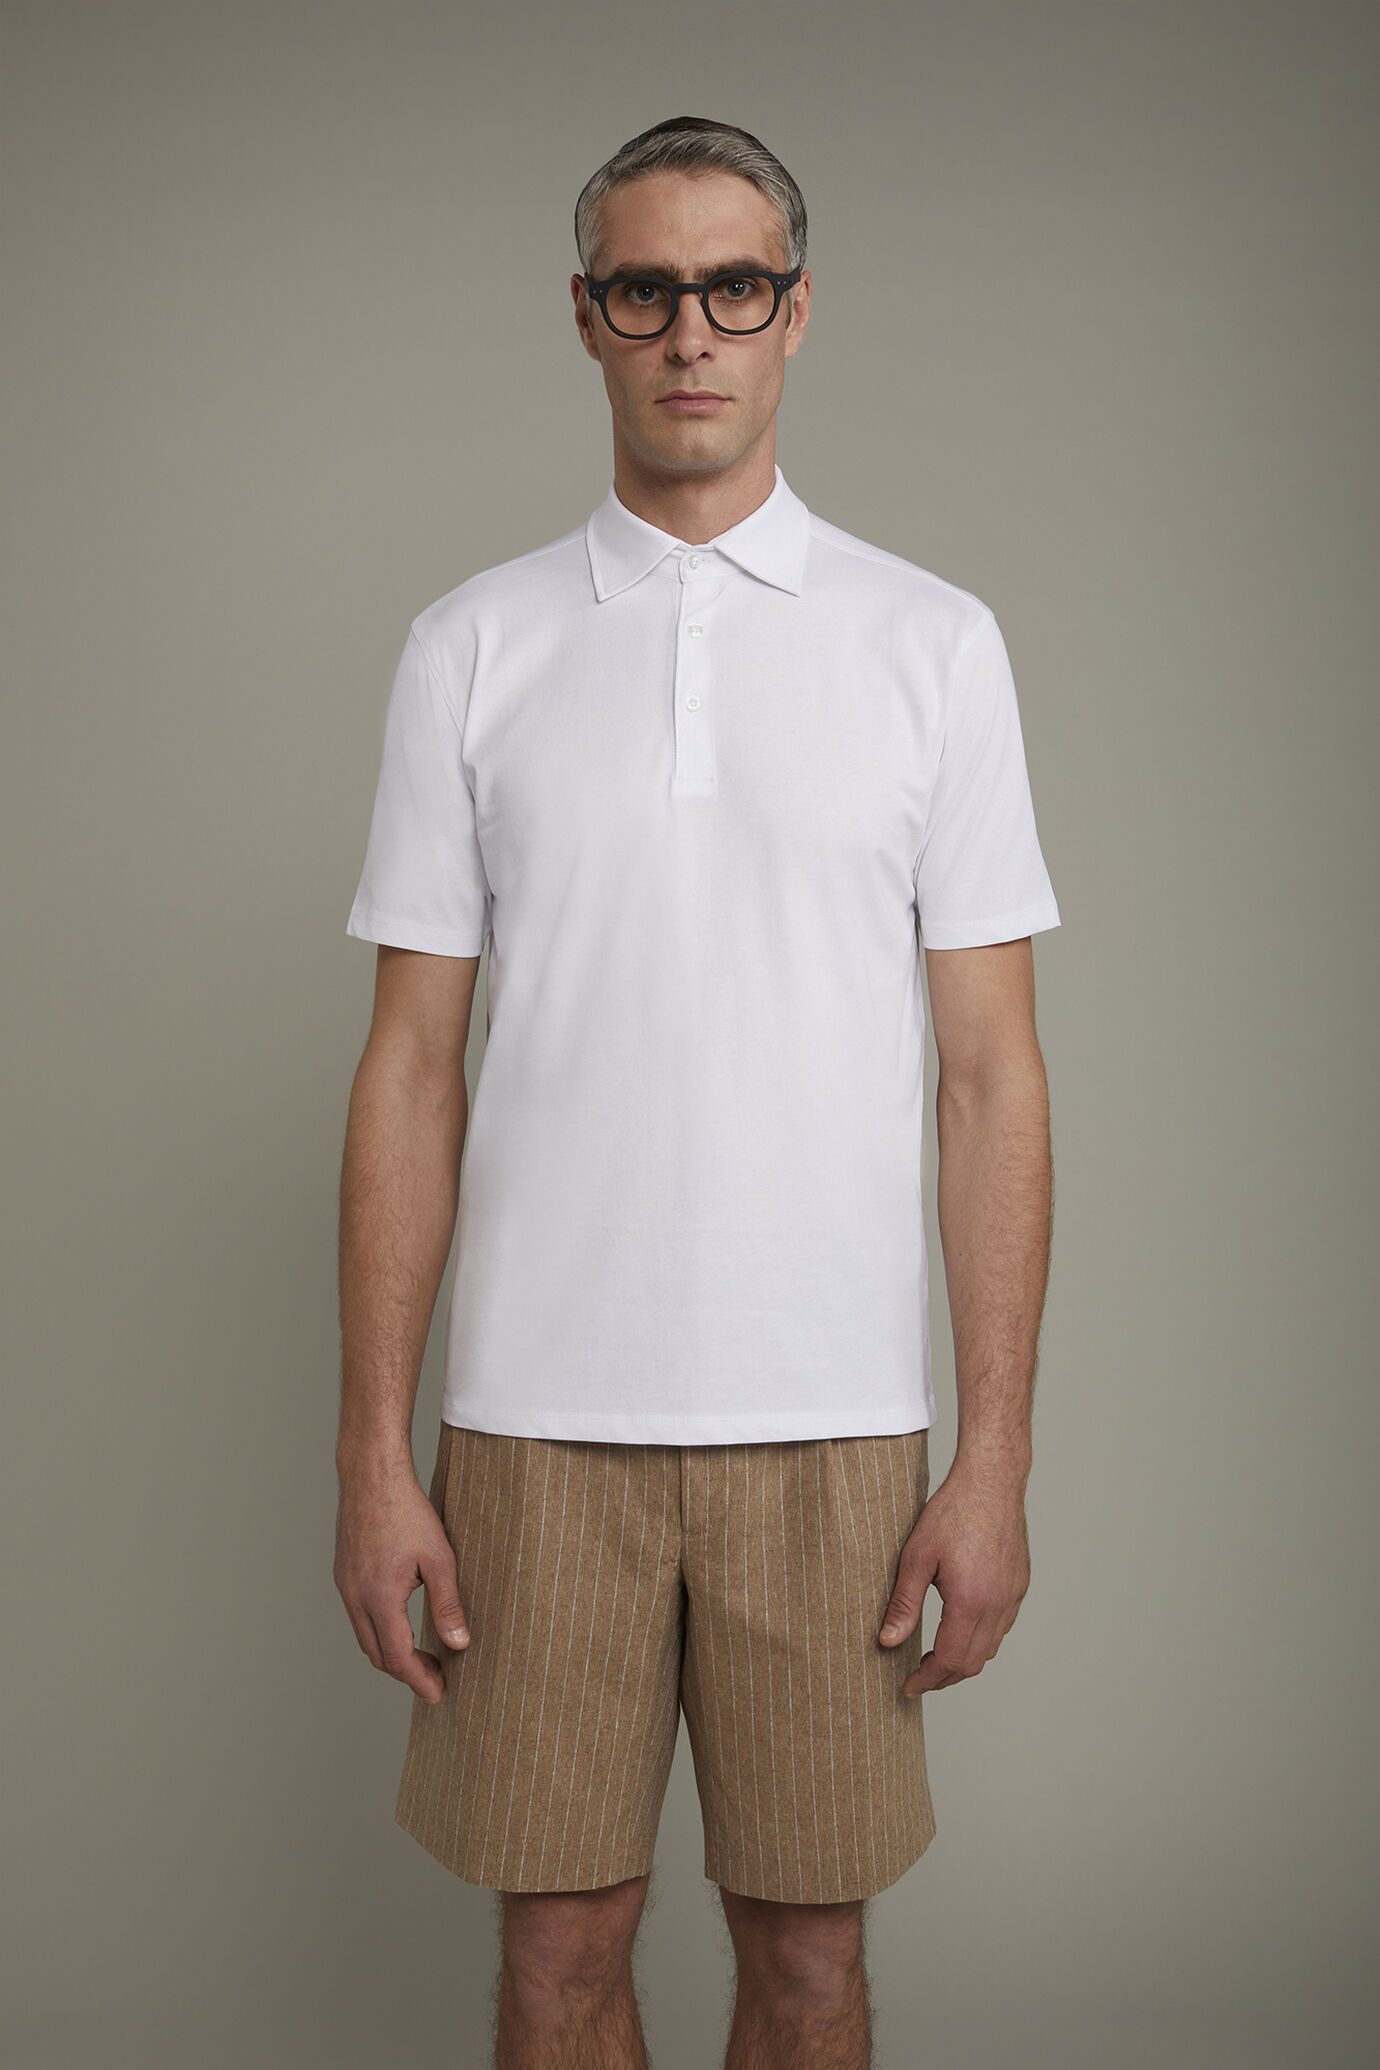 Kurzärmeliges Herren-Poloshirt aus 100 % Supima-Baumwolle in normaler Passform